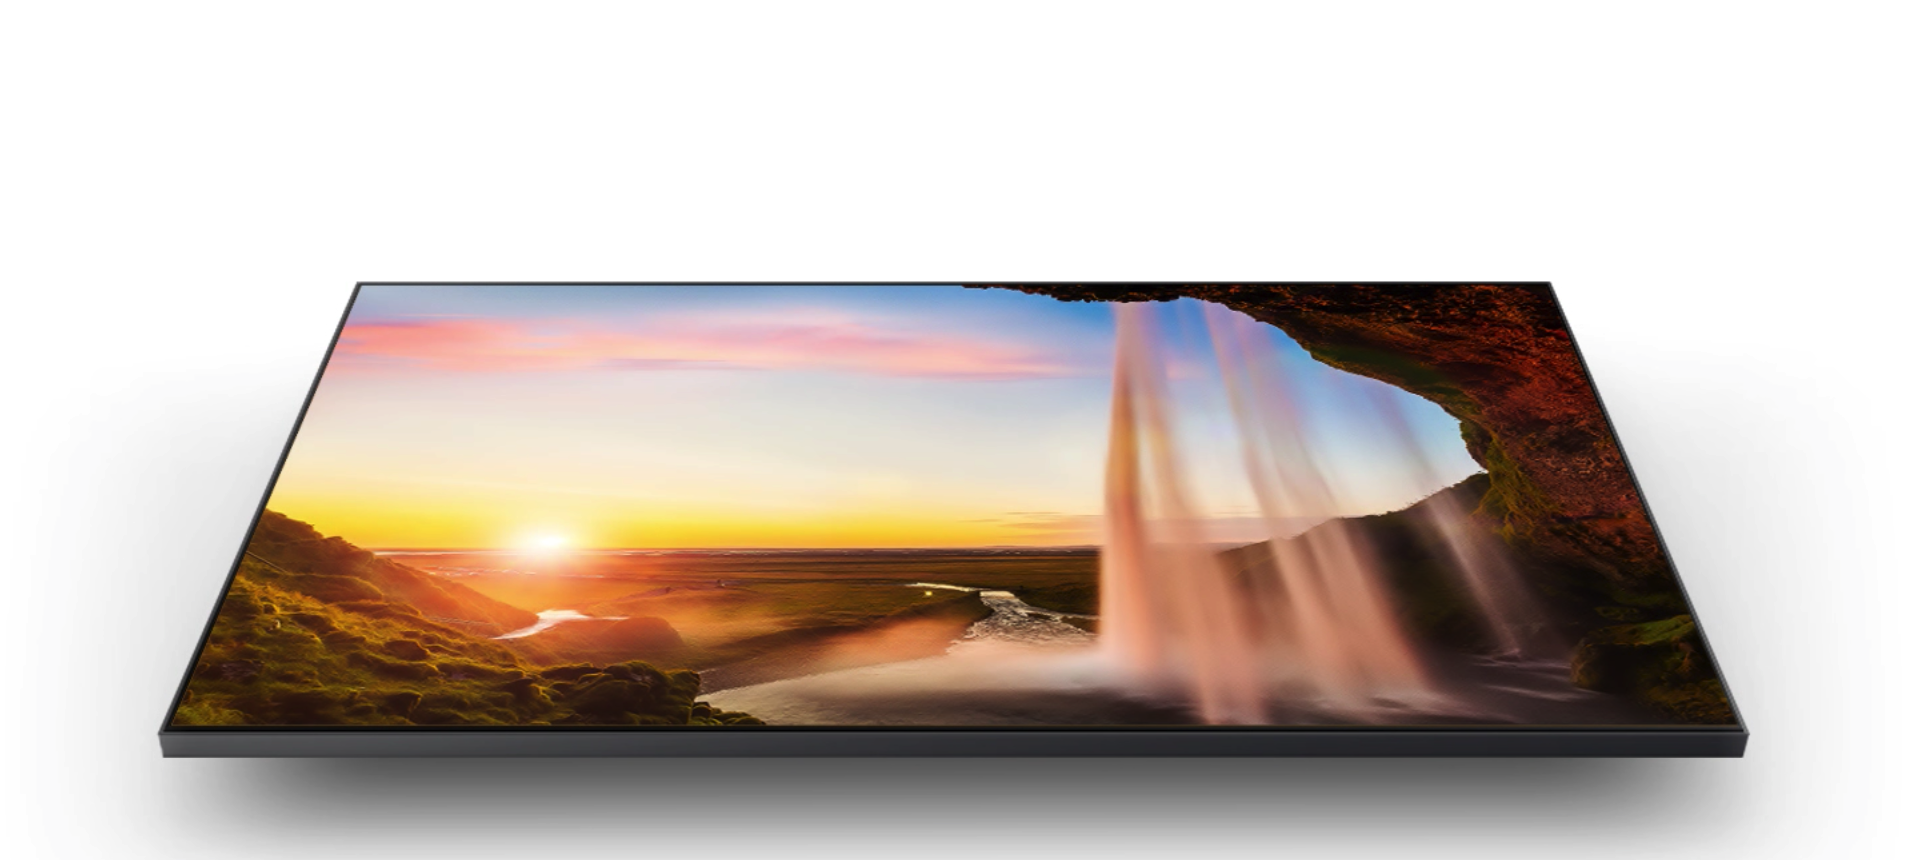 Smart TV Crystal UHD 4K 50 inch TU8500 2020